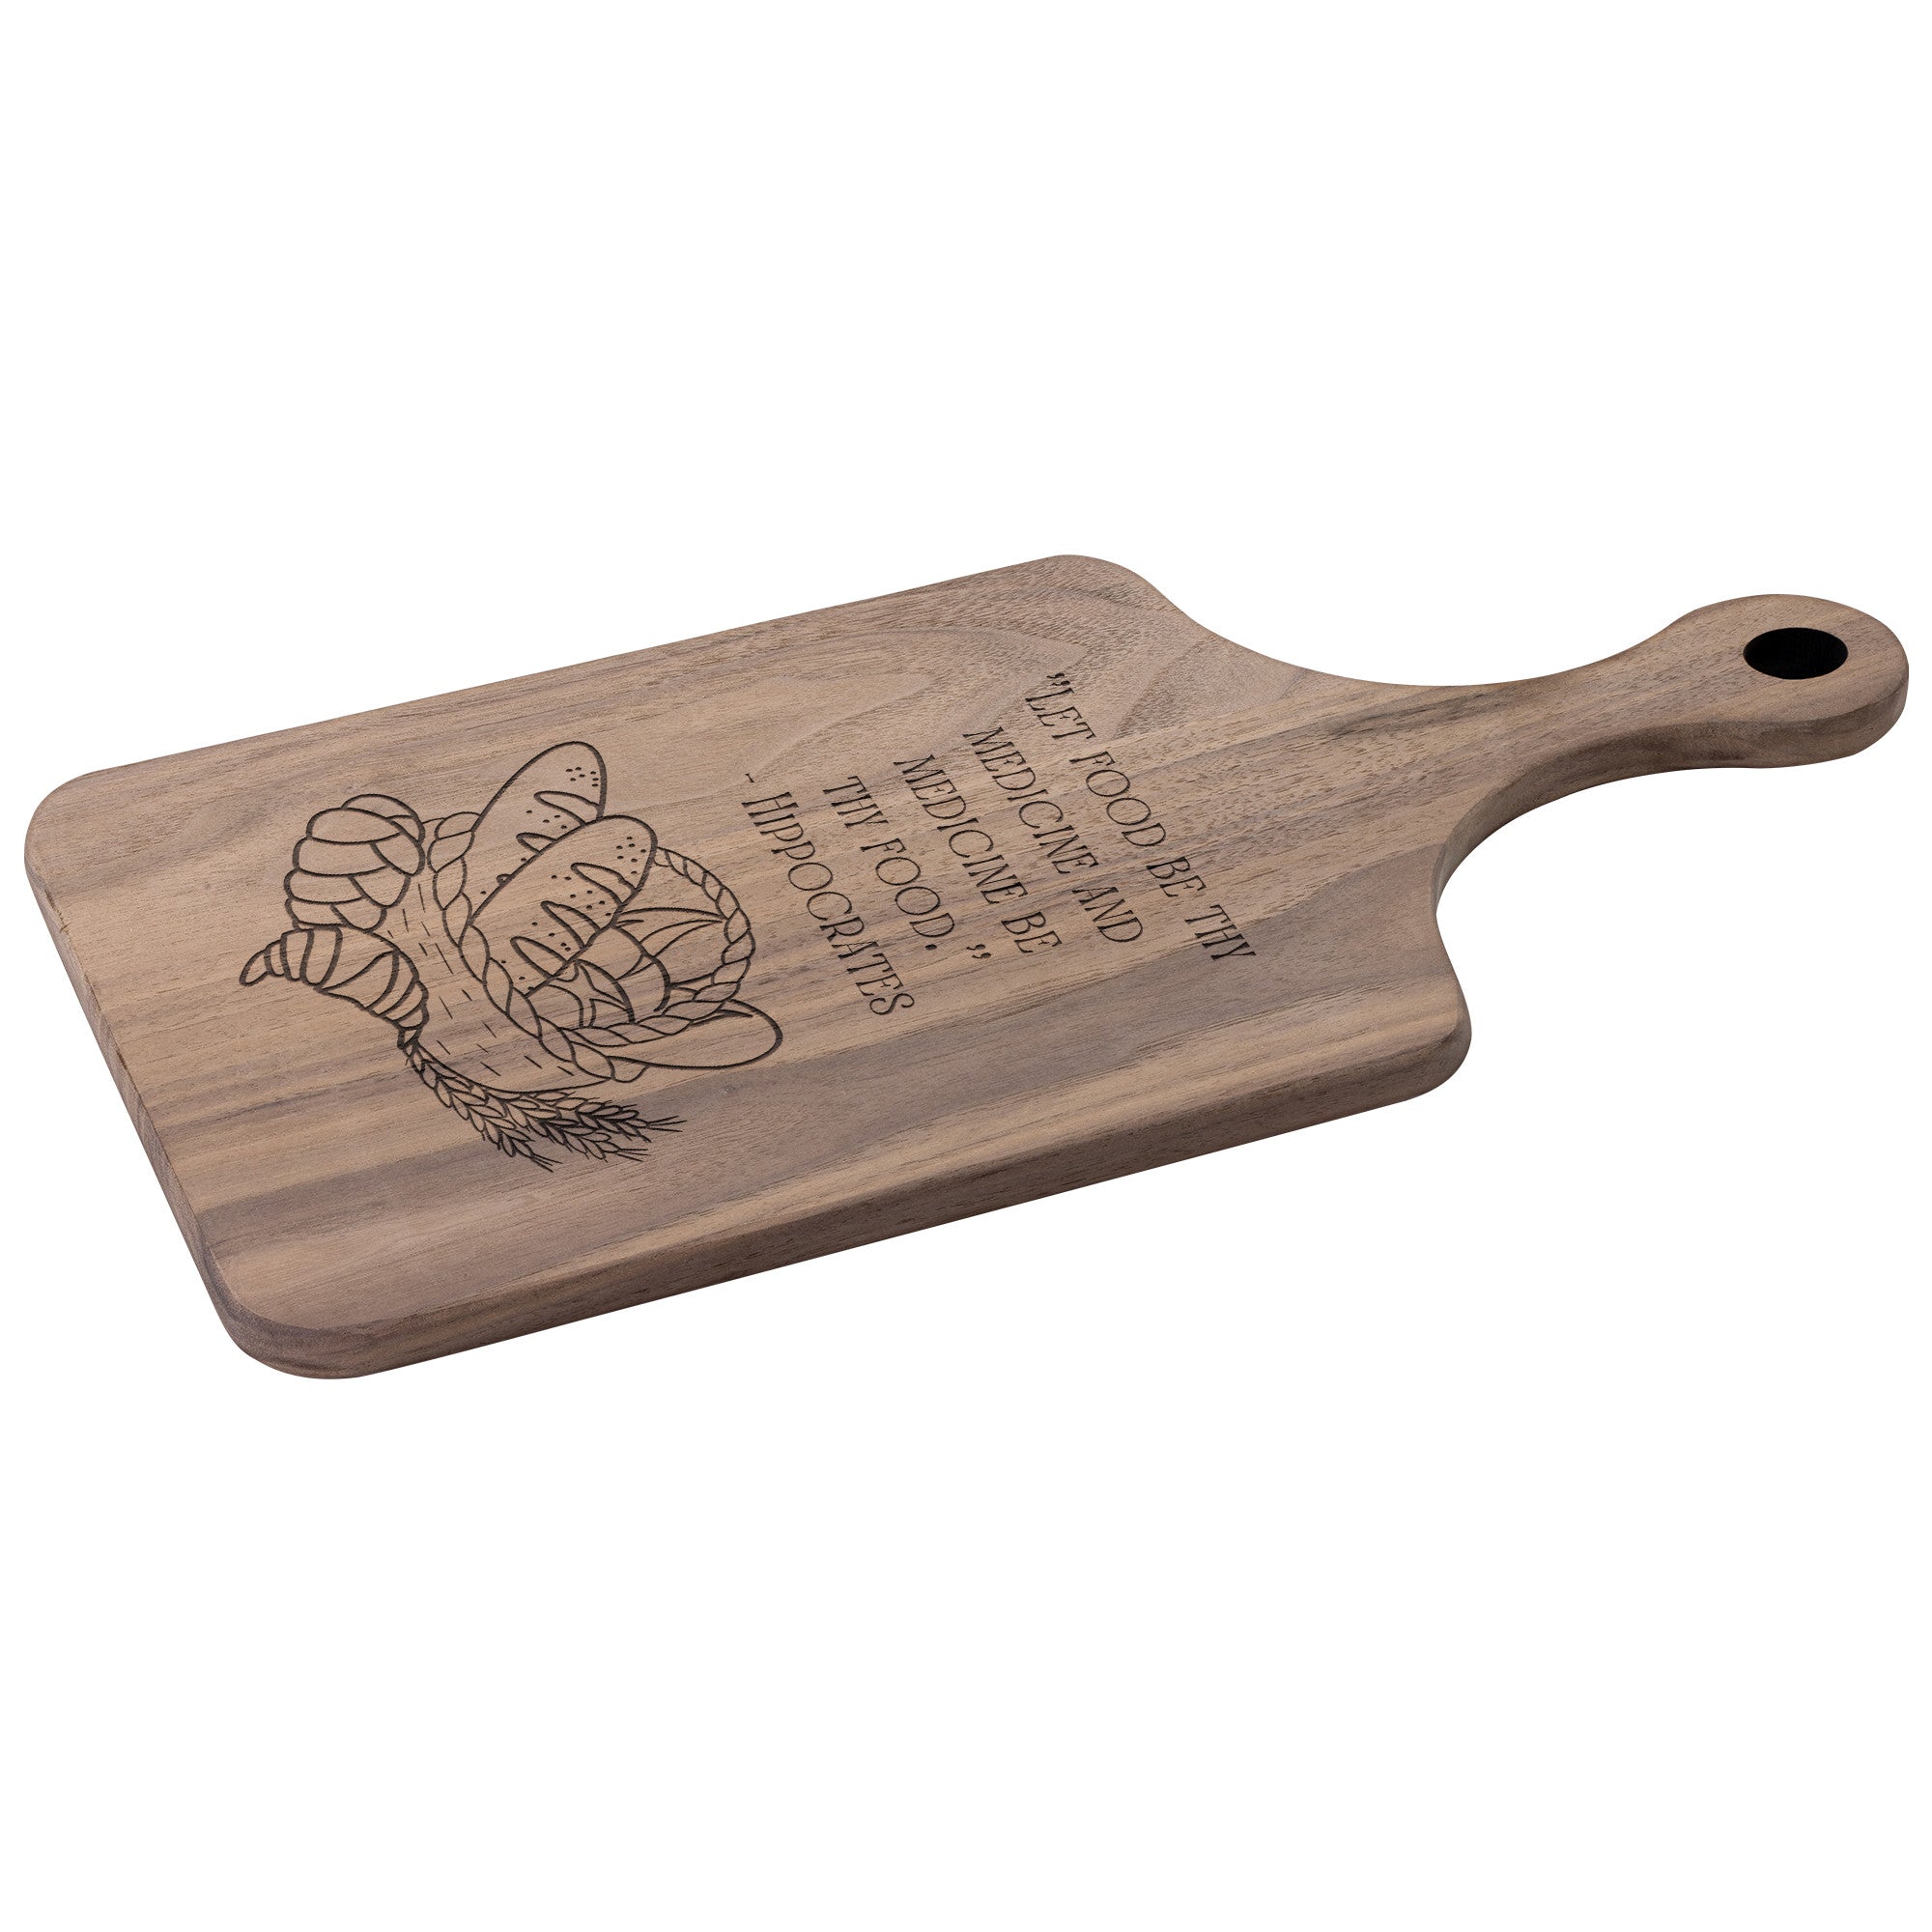 Hardwood Paddle Cutting Board - Variant 09